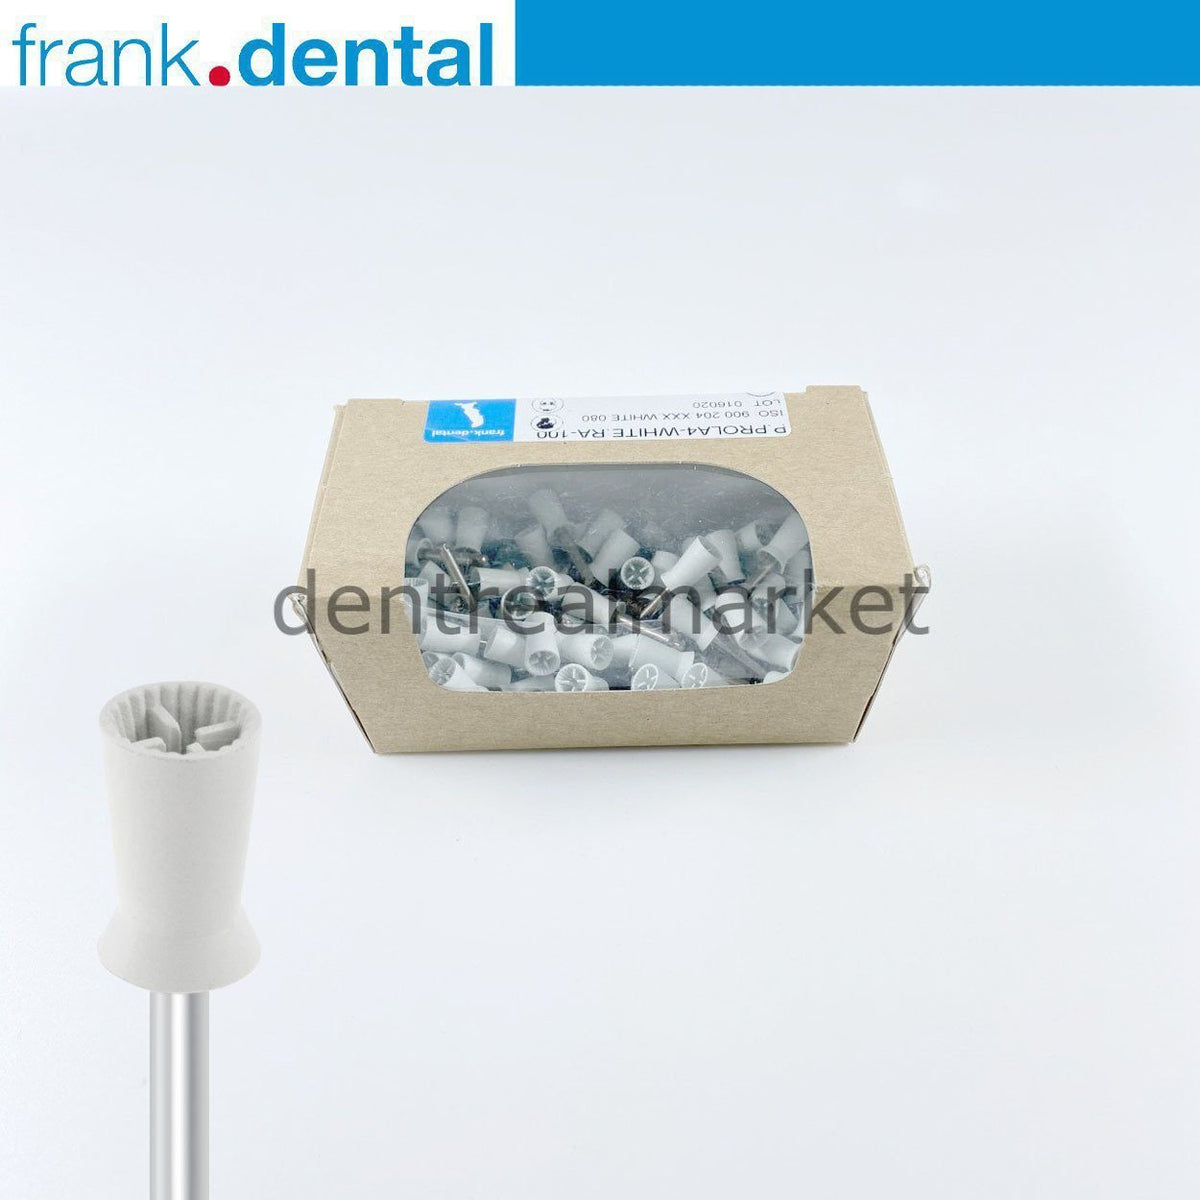 DentrealStore - Frank Dental Detertrage Polishing Rubber Medium - 100 Pcs